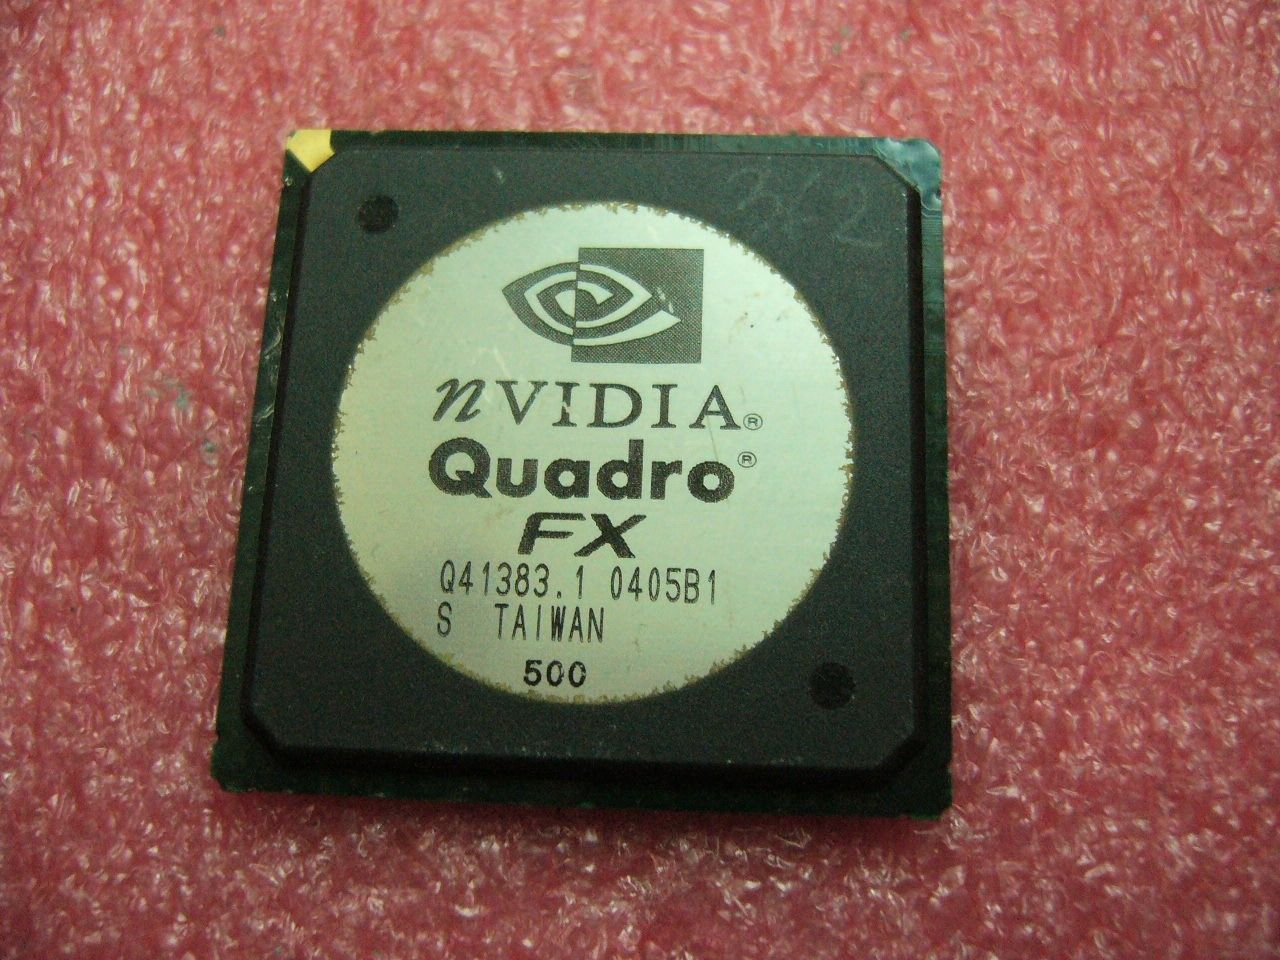 QTY 1x nVidia Quadro FX 500 GPU